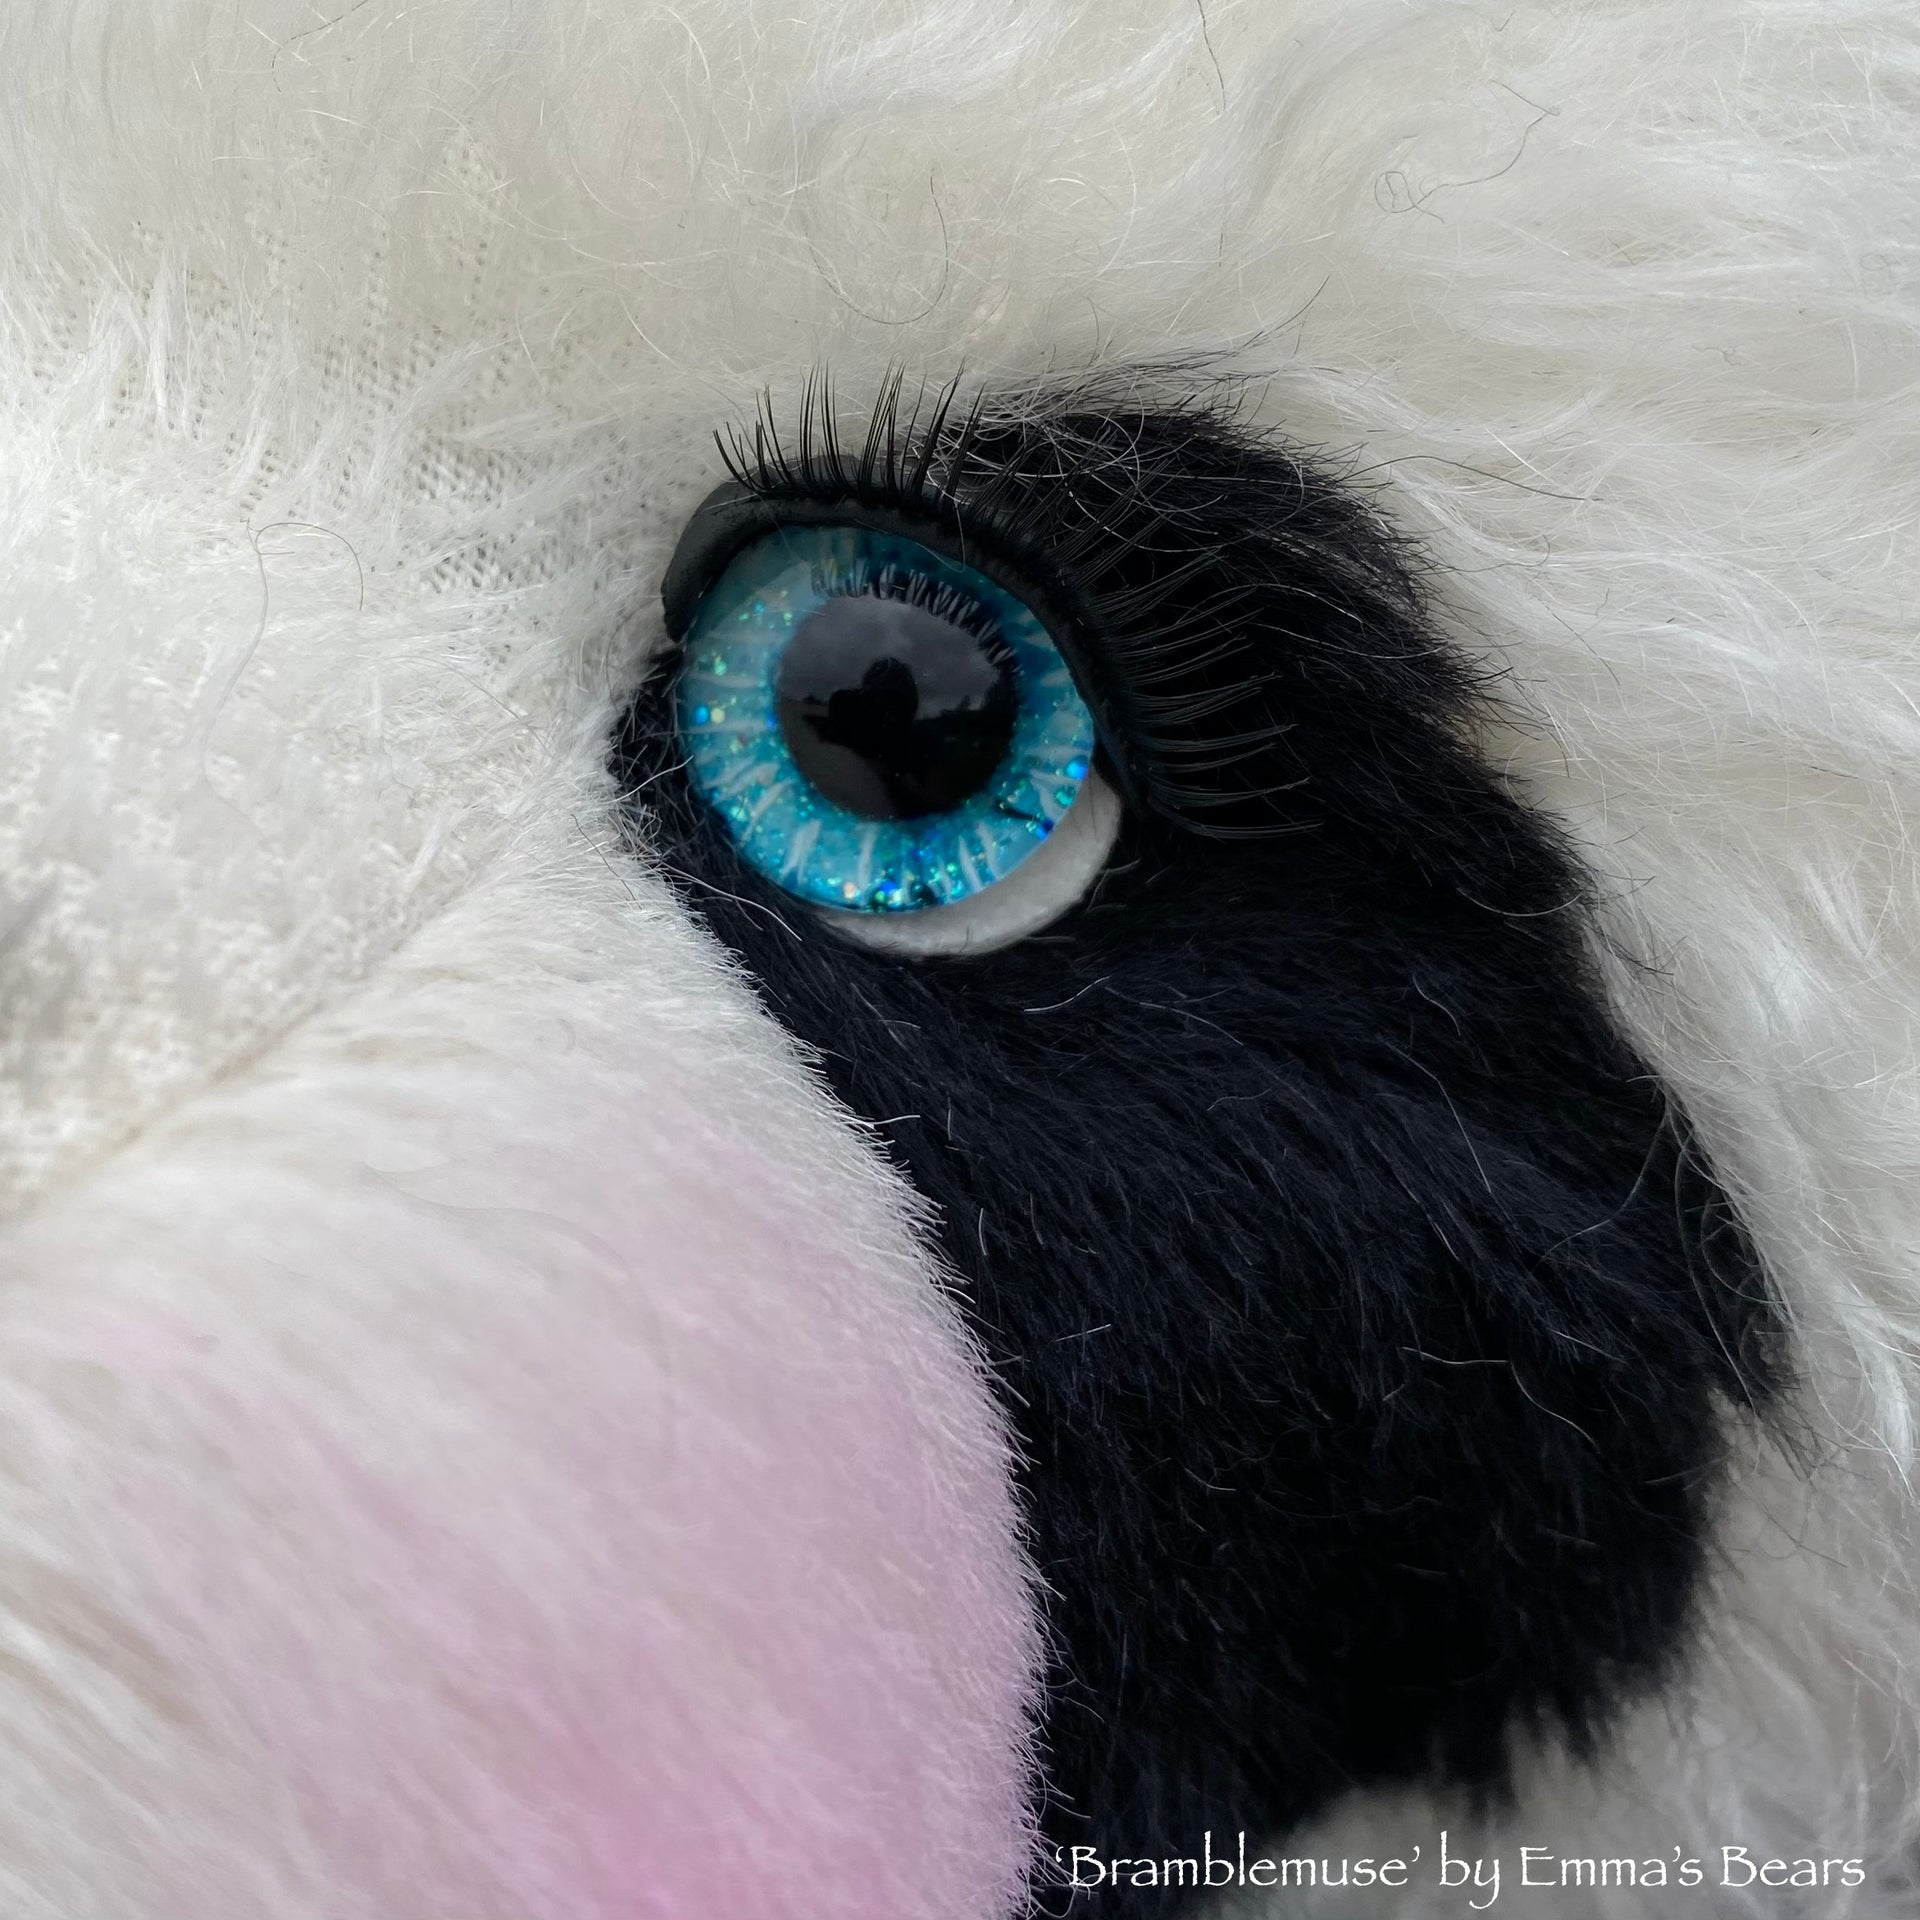 Bramblemuse - 24" mohair artist panda bear by Emma's Bears  - OOAK